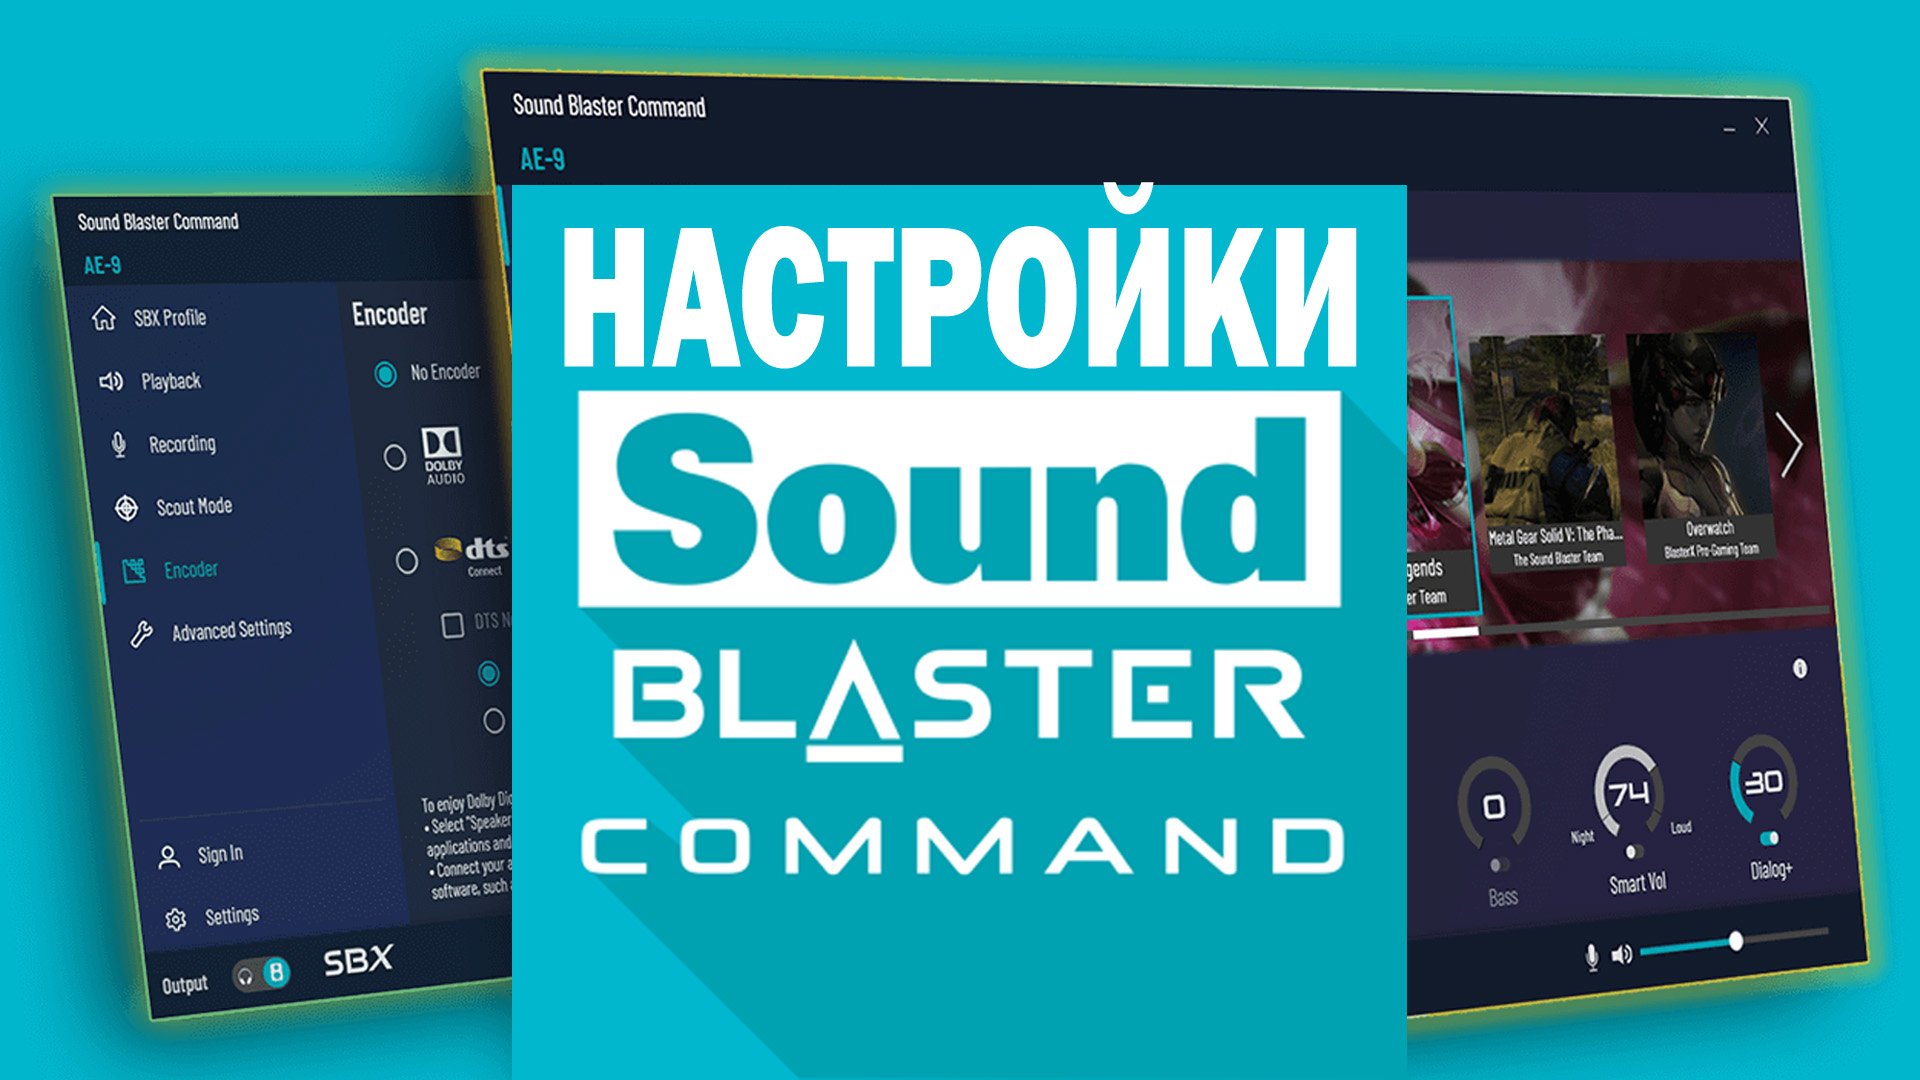 Sound Blaster Command. Blaster command